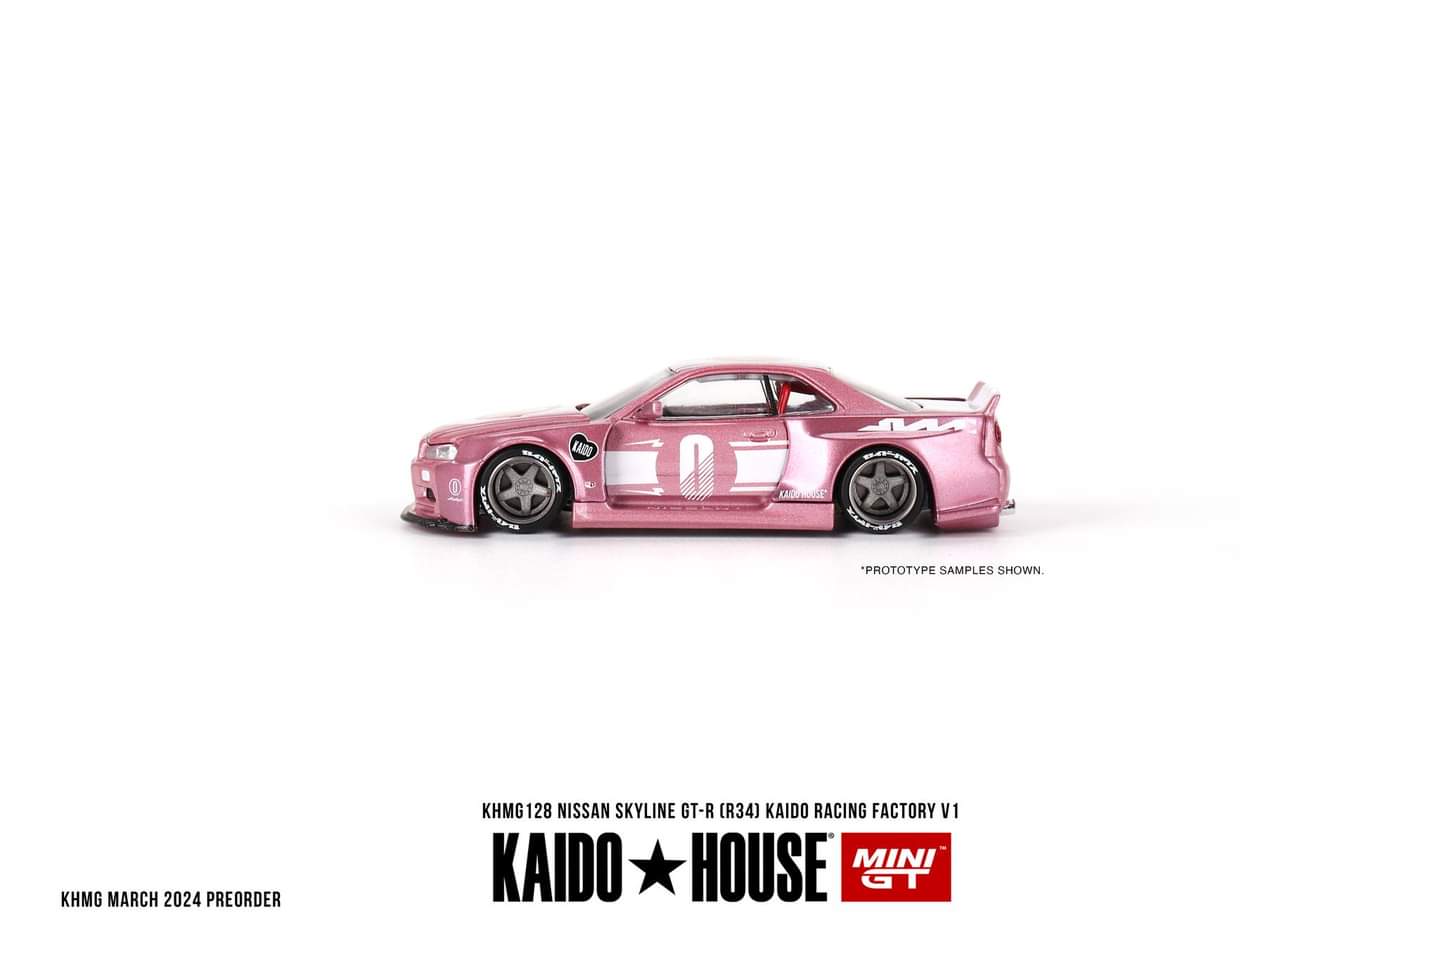 (PRE-ORDER) Kaido House
Nissan Skyline GT-R (R34) KAIDO RACING FACTORY V1